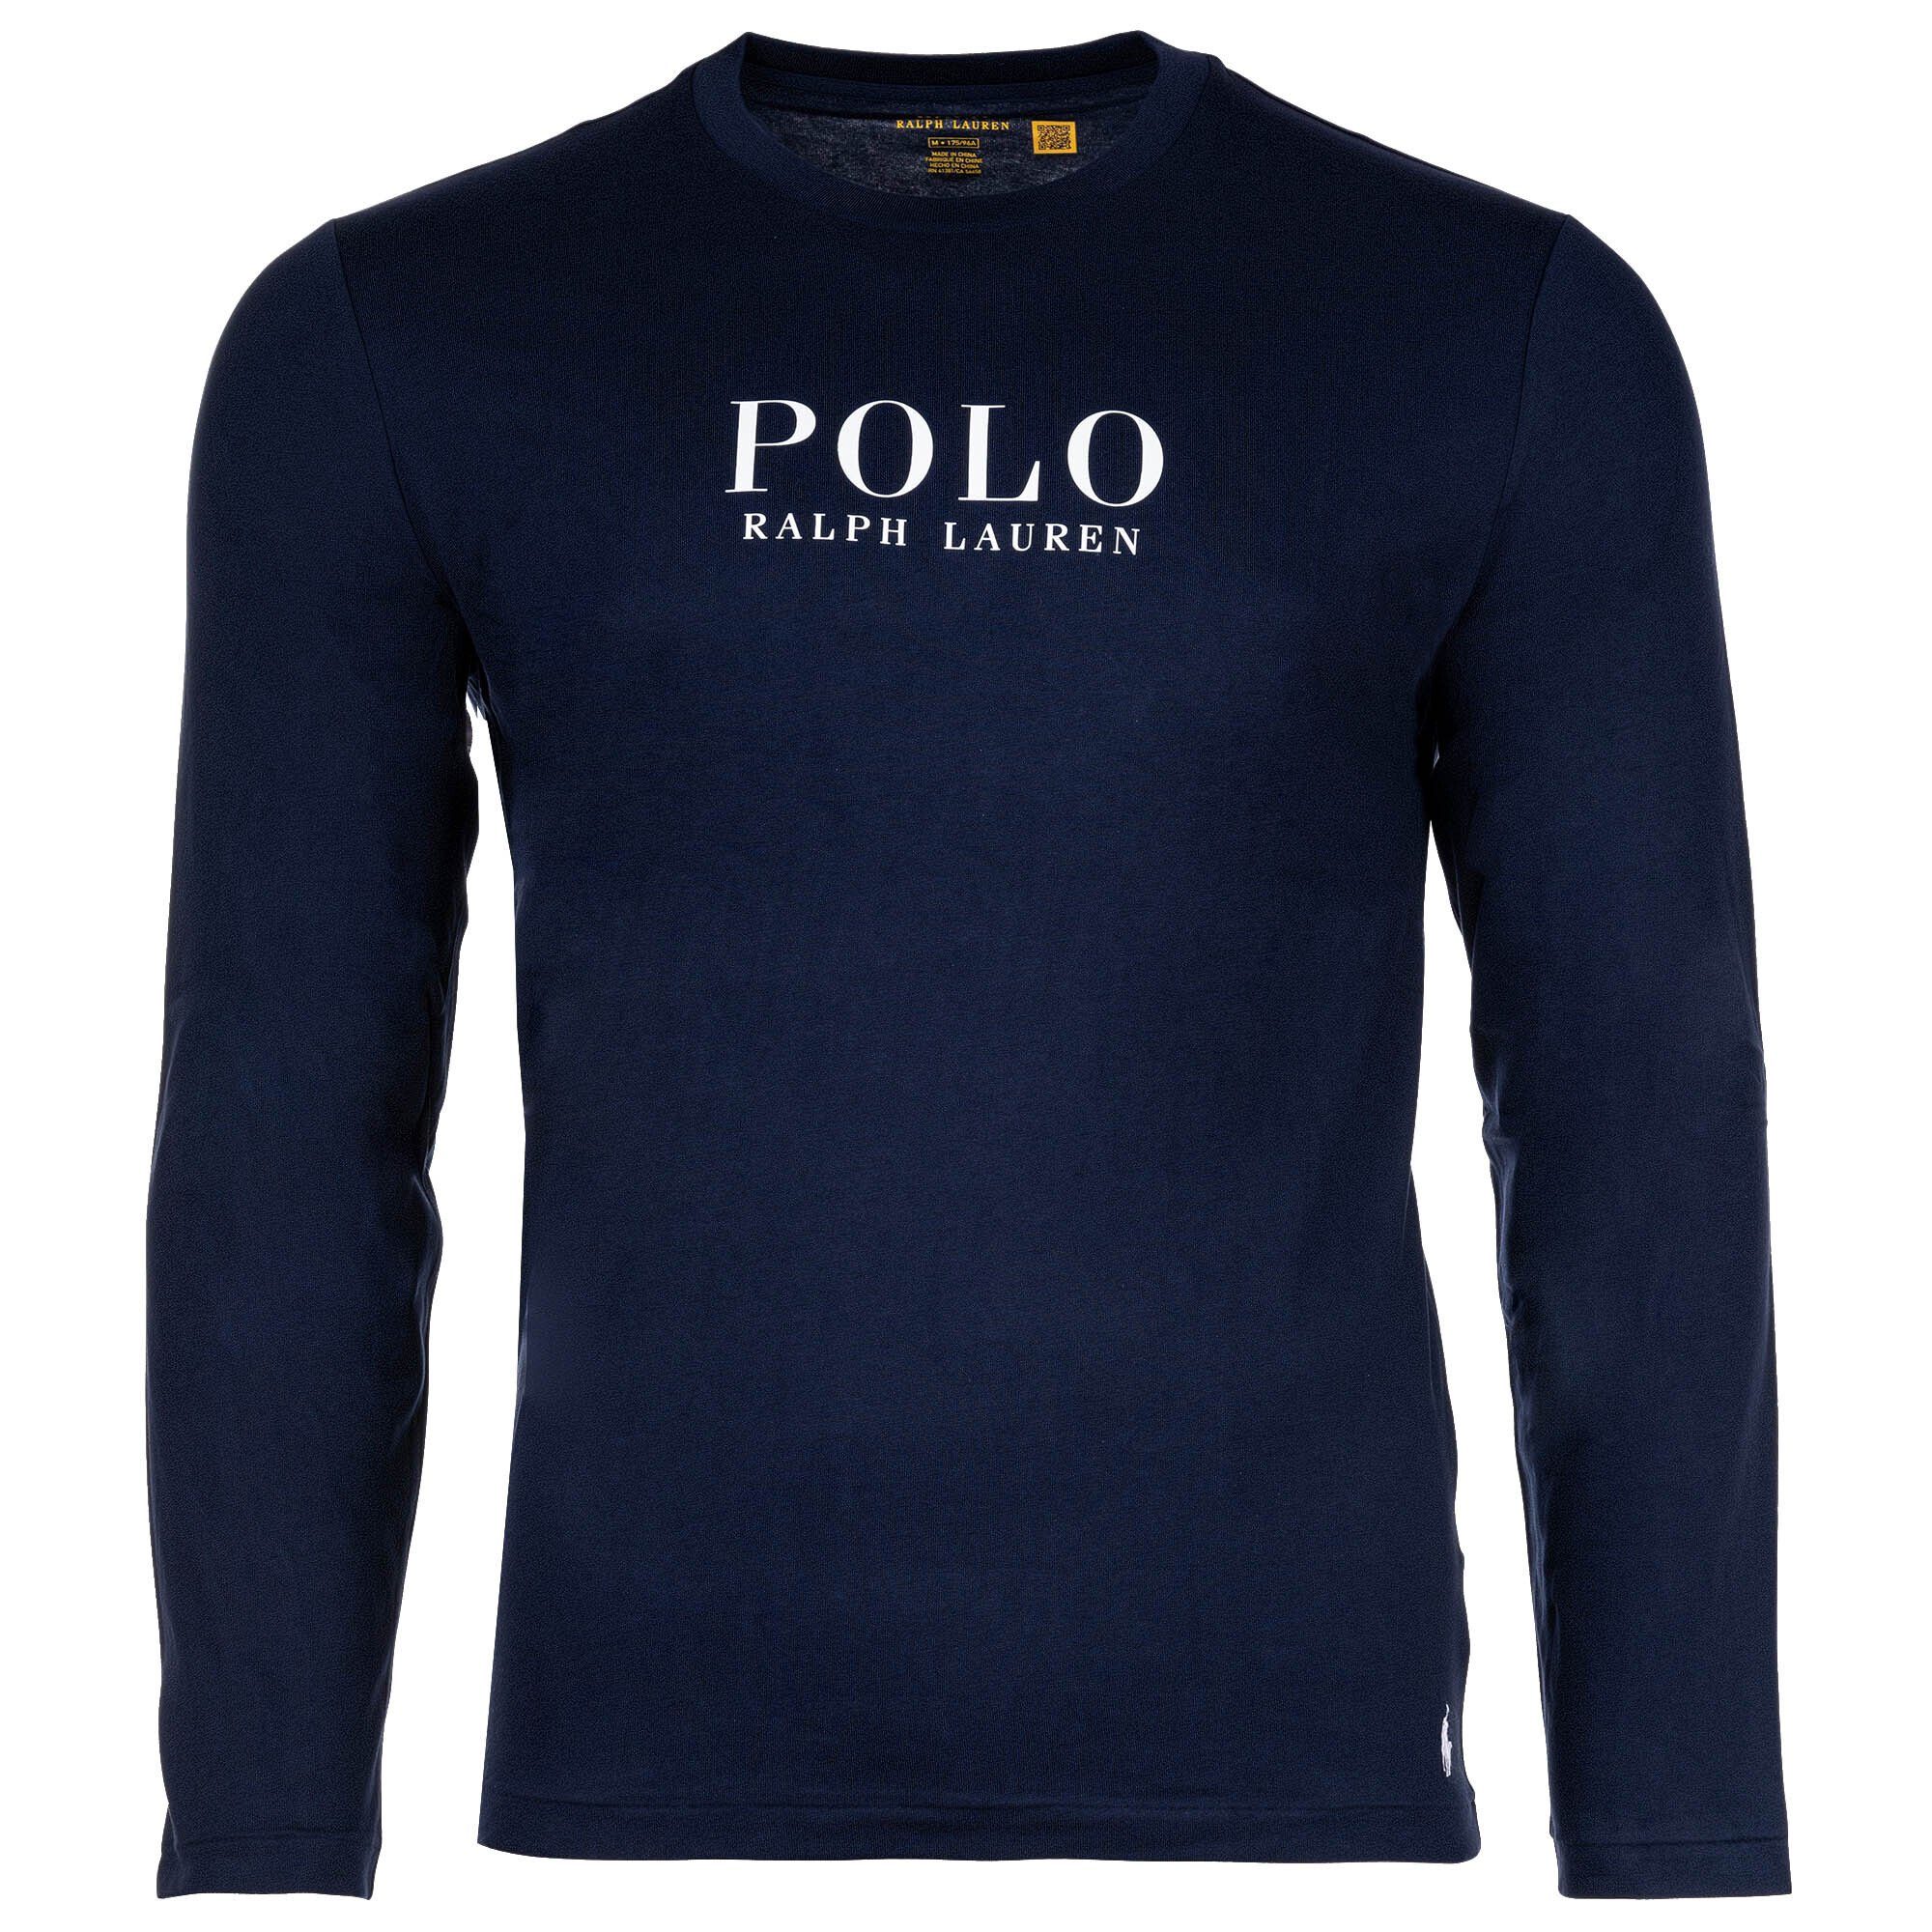 Polo Ralph Lauren T-Shirt Herren Longsleeve - CREW-SLEEP TOP, Schlafshirt Marineblau